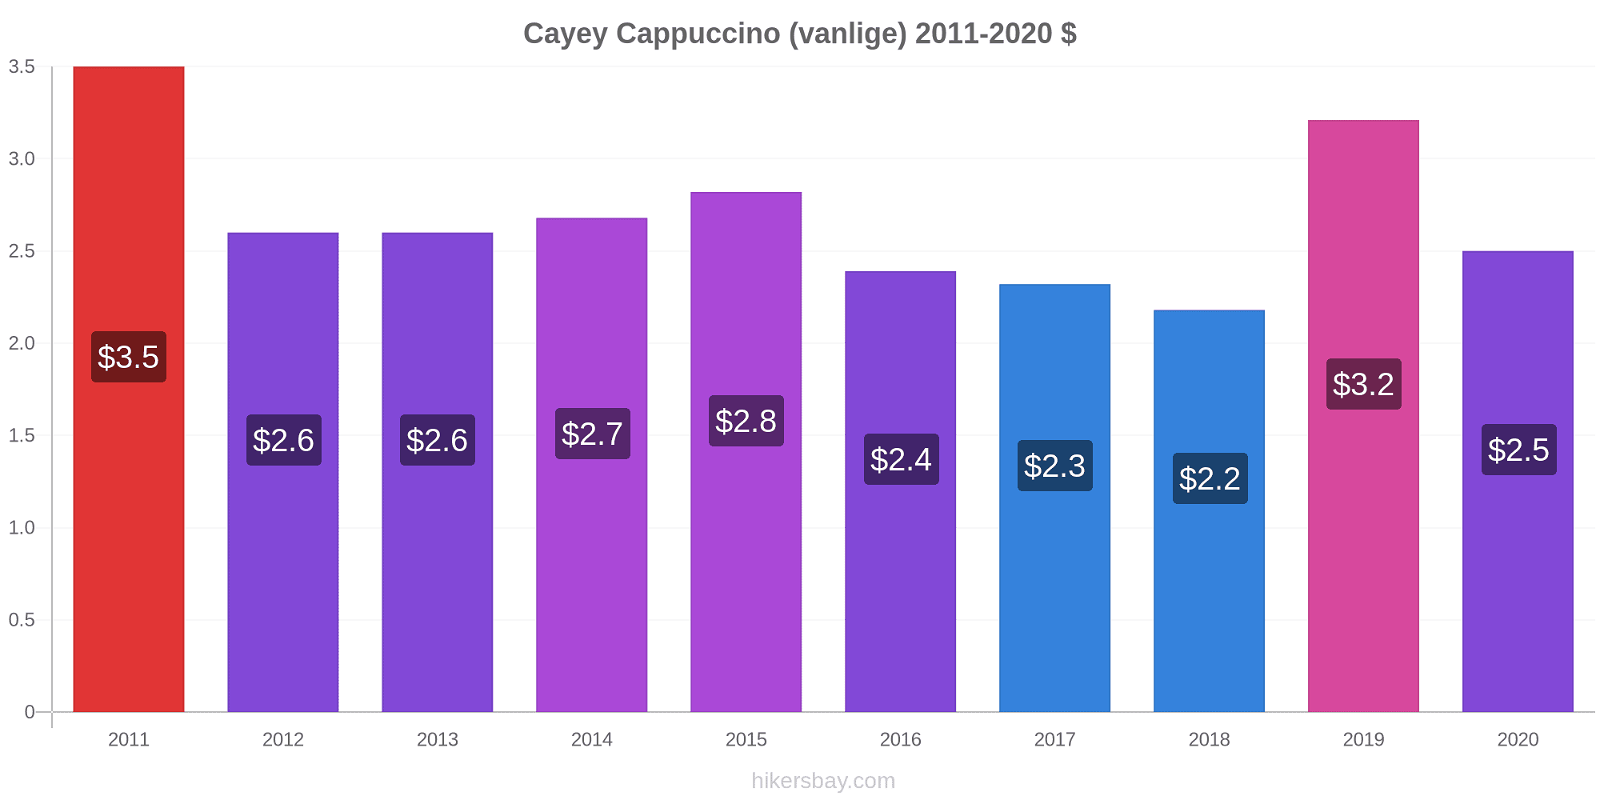 Cayey prisendringer Cappuccino (vanlige) hikersbay.com